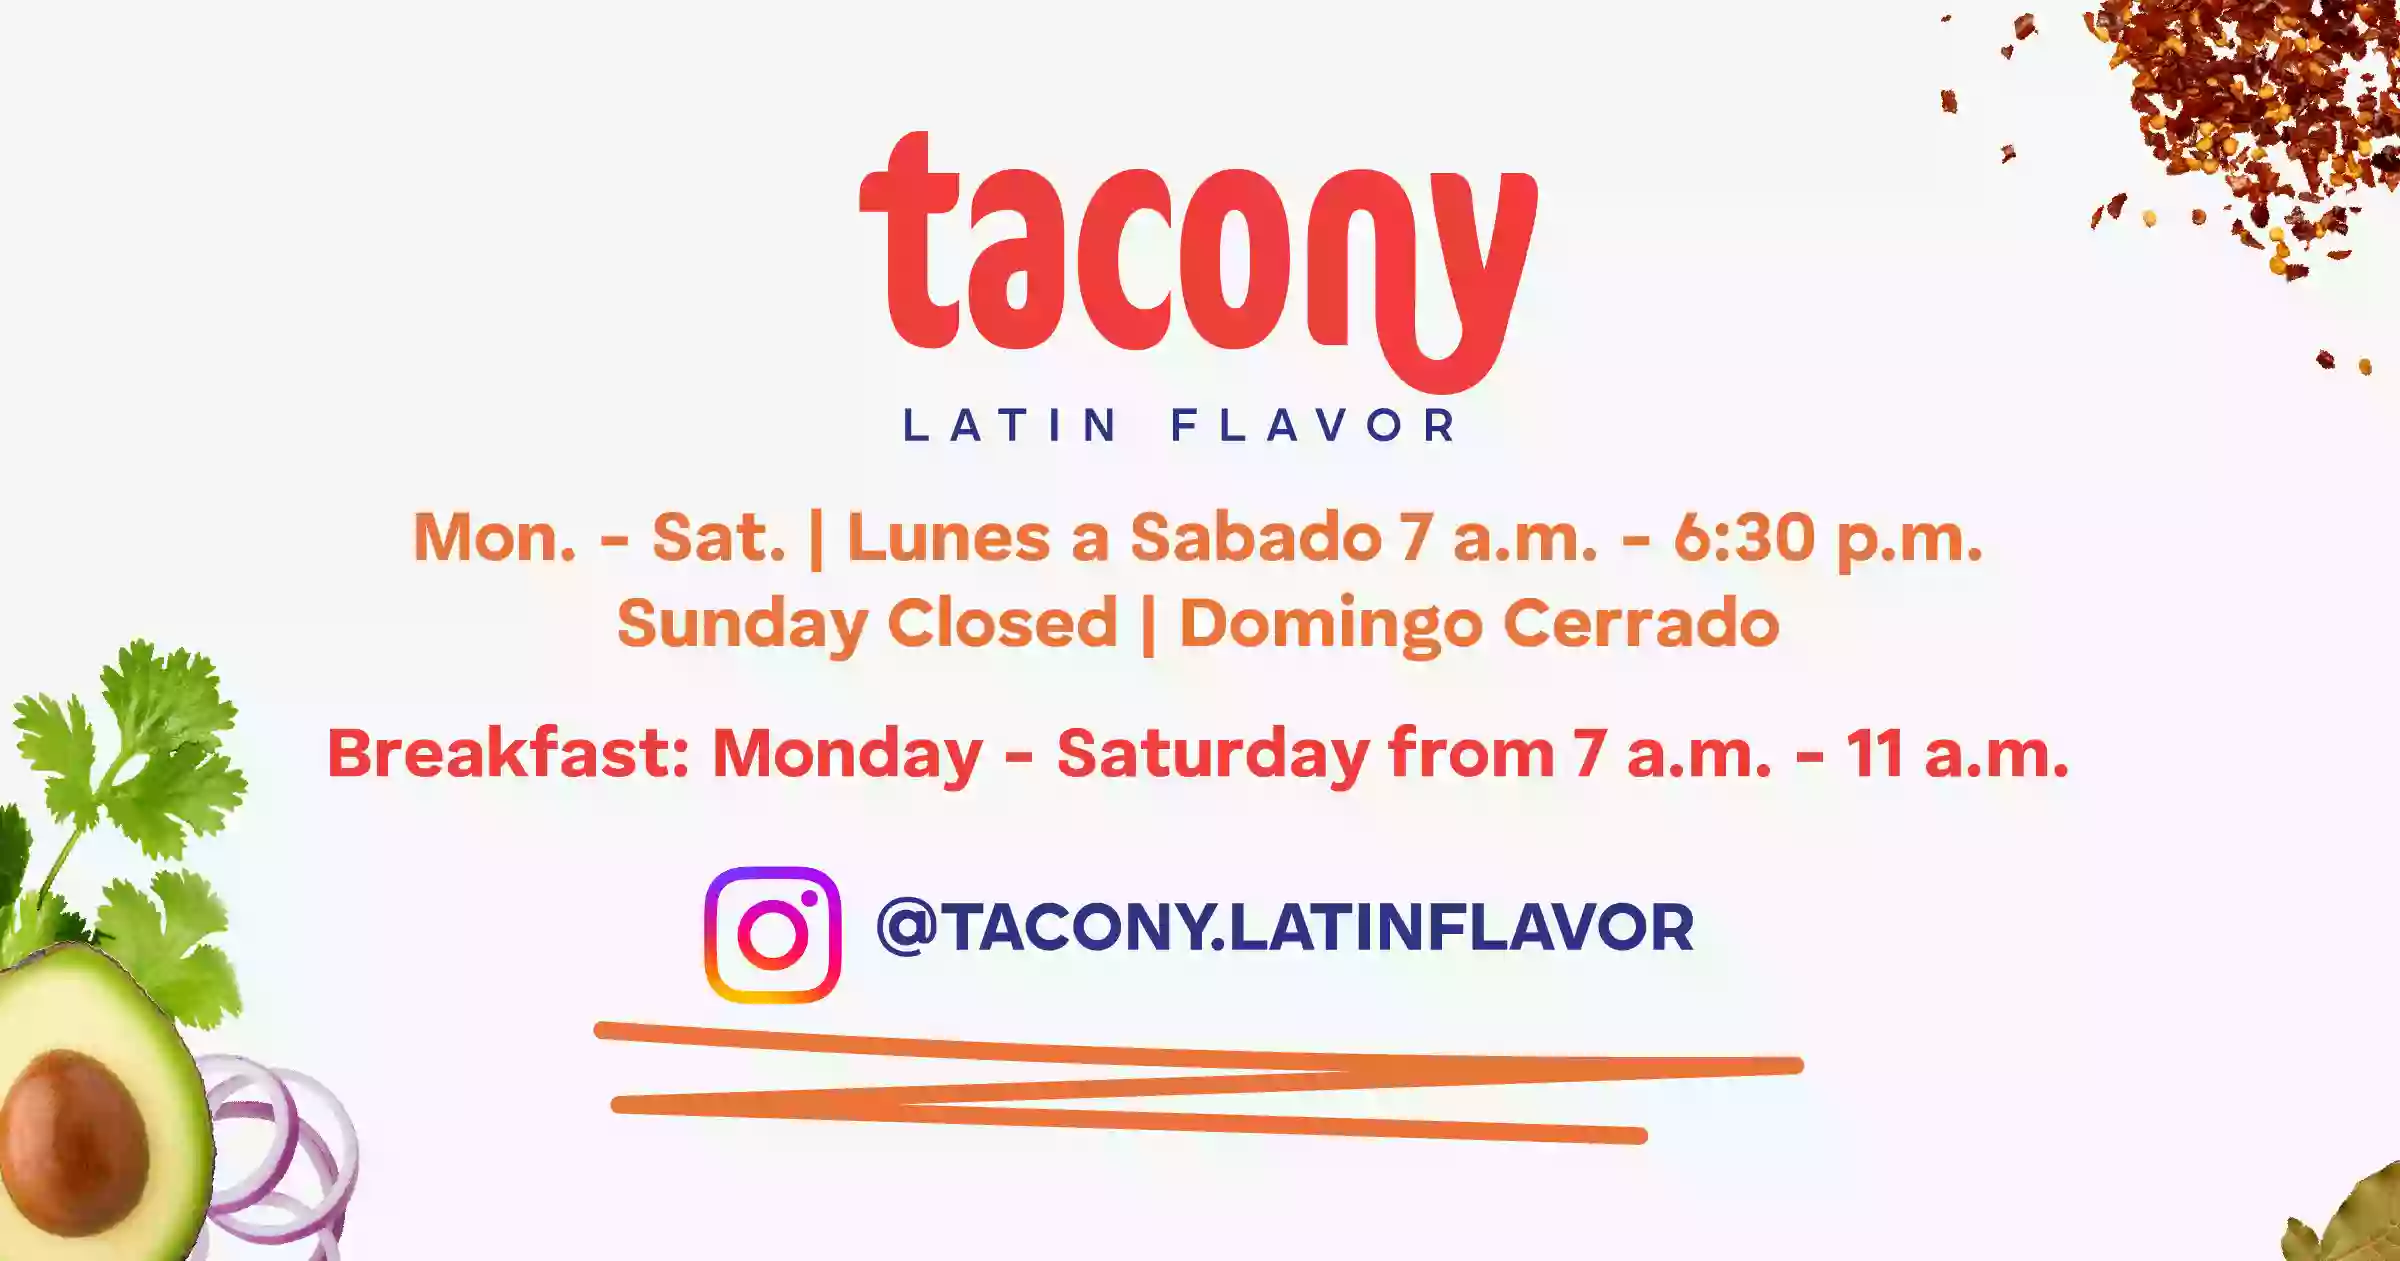 Tacony Latin Flavor